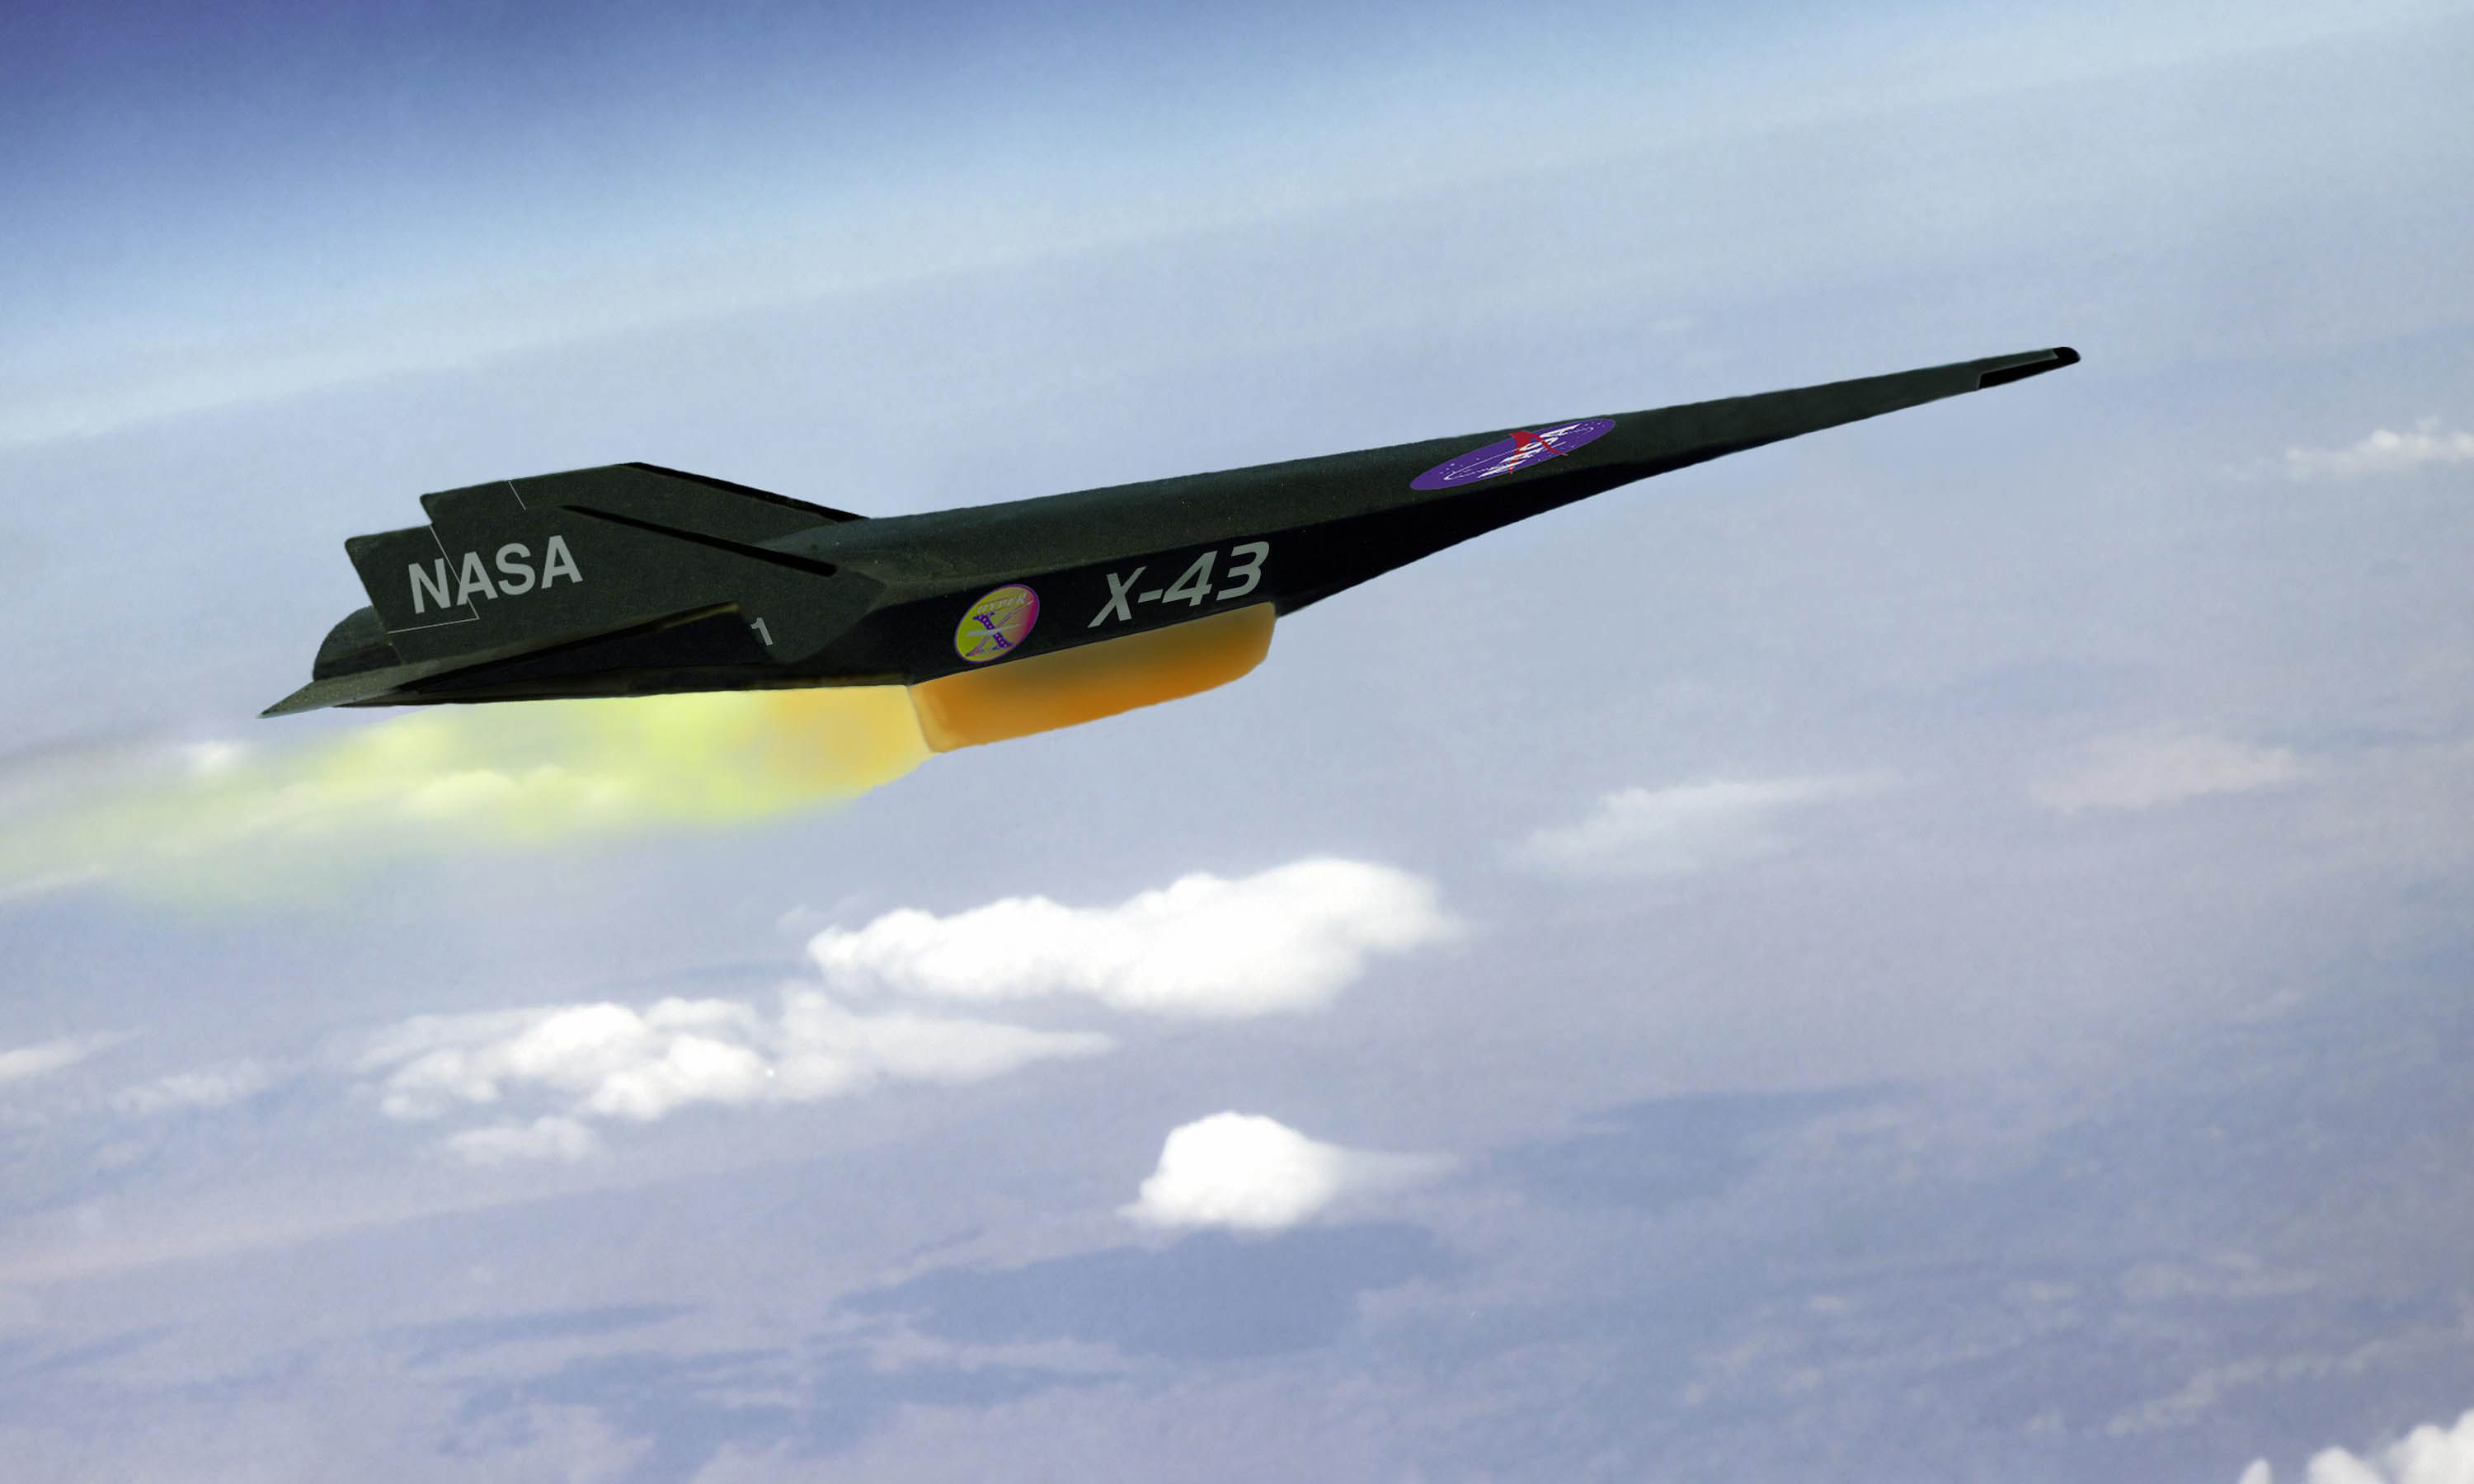 Hypersonic flights